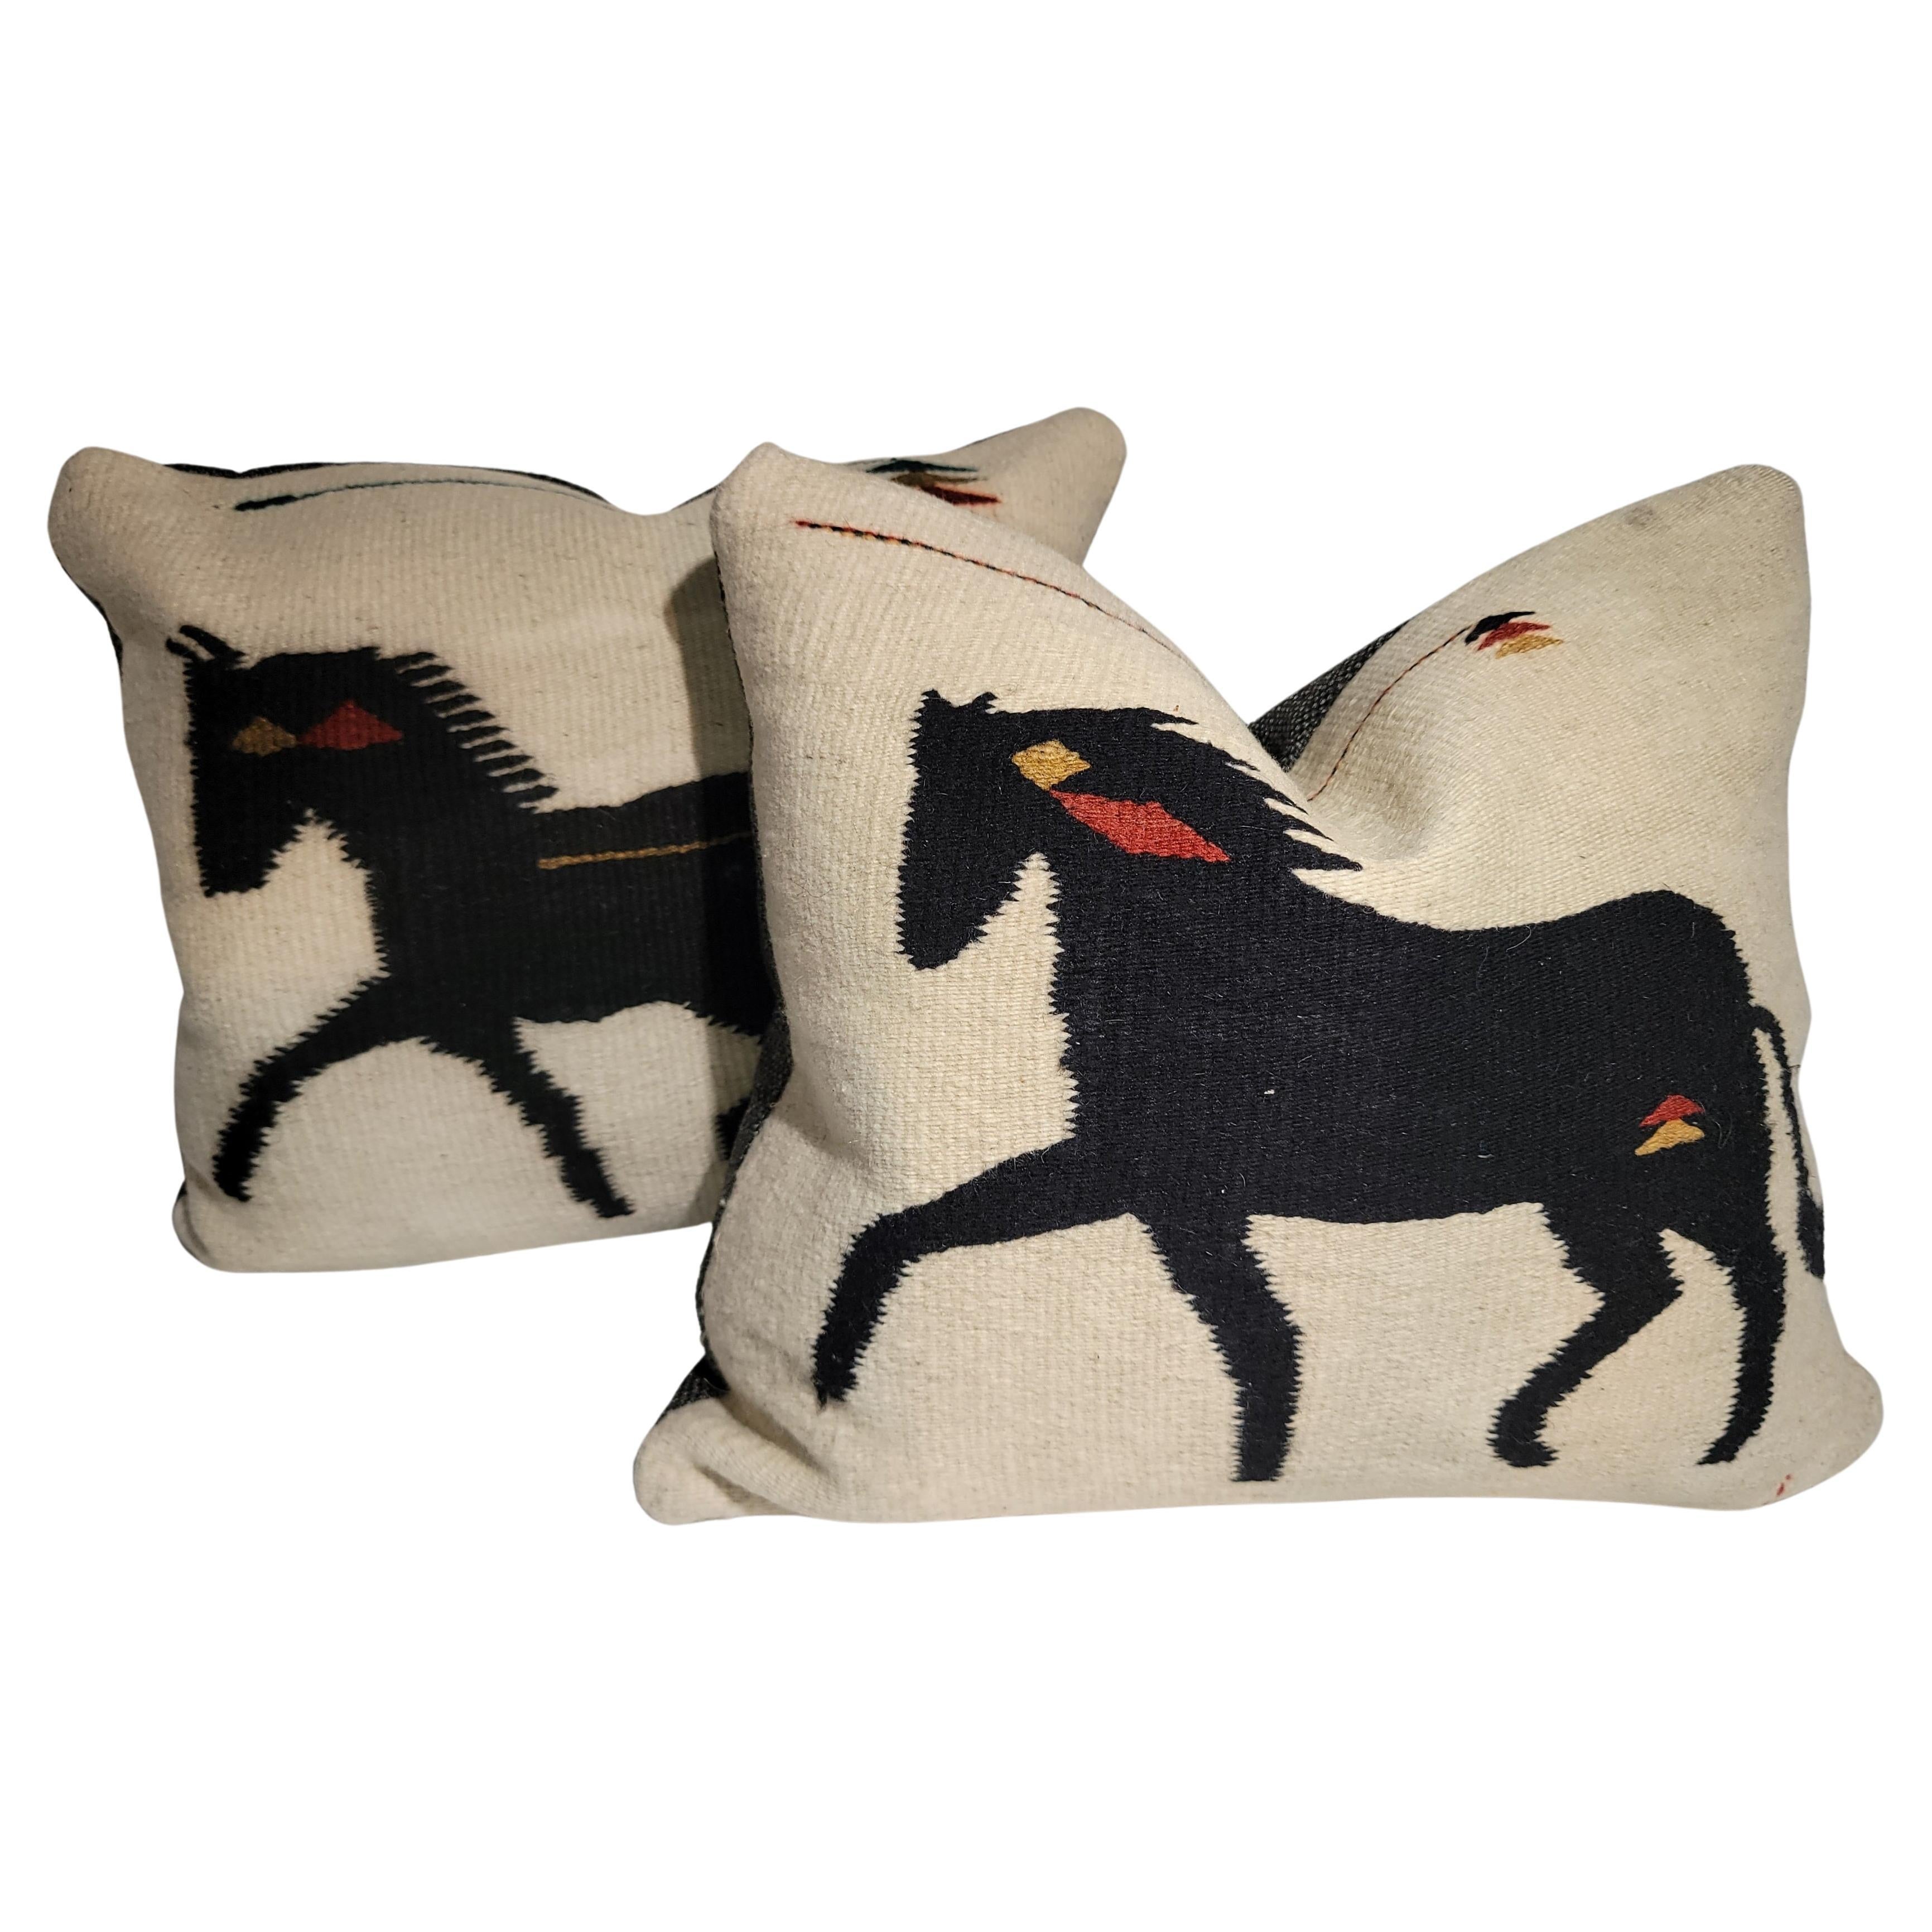 Mexican Indian Weaving Horse Pillows -Pair